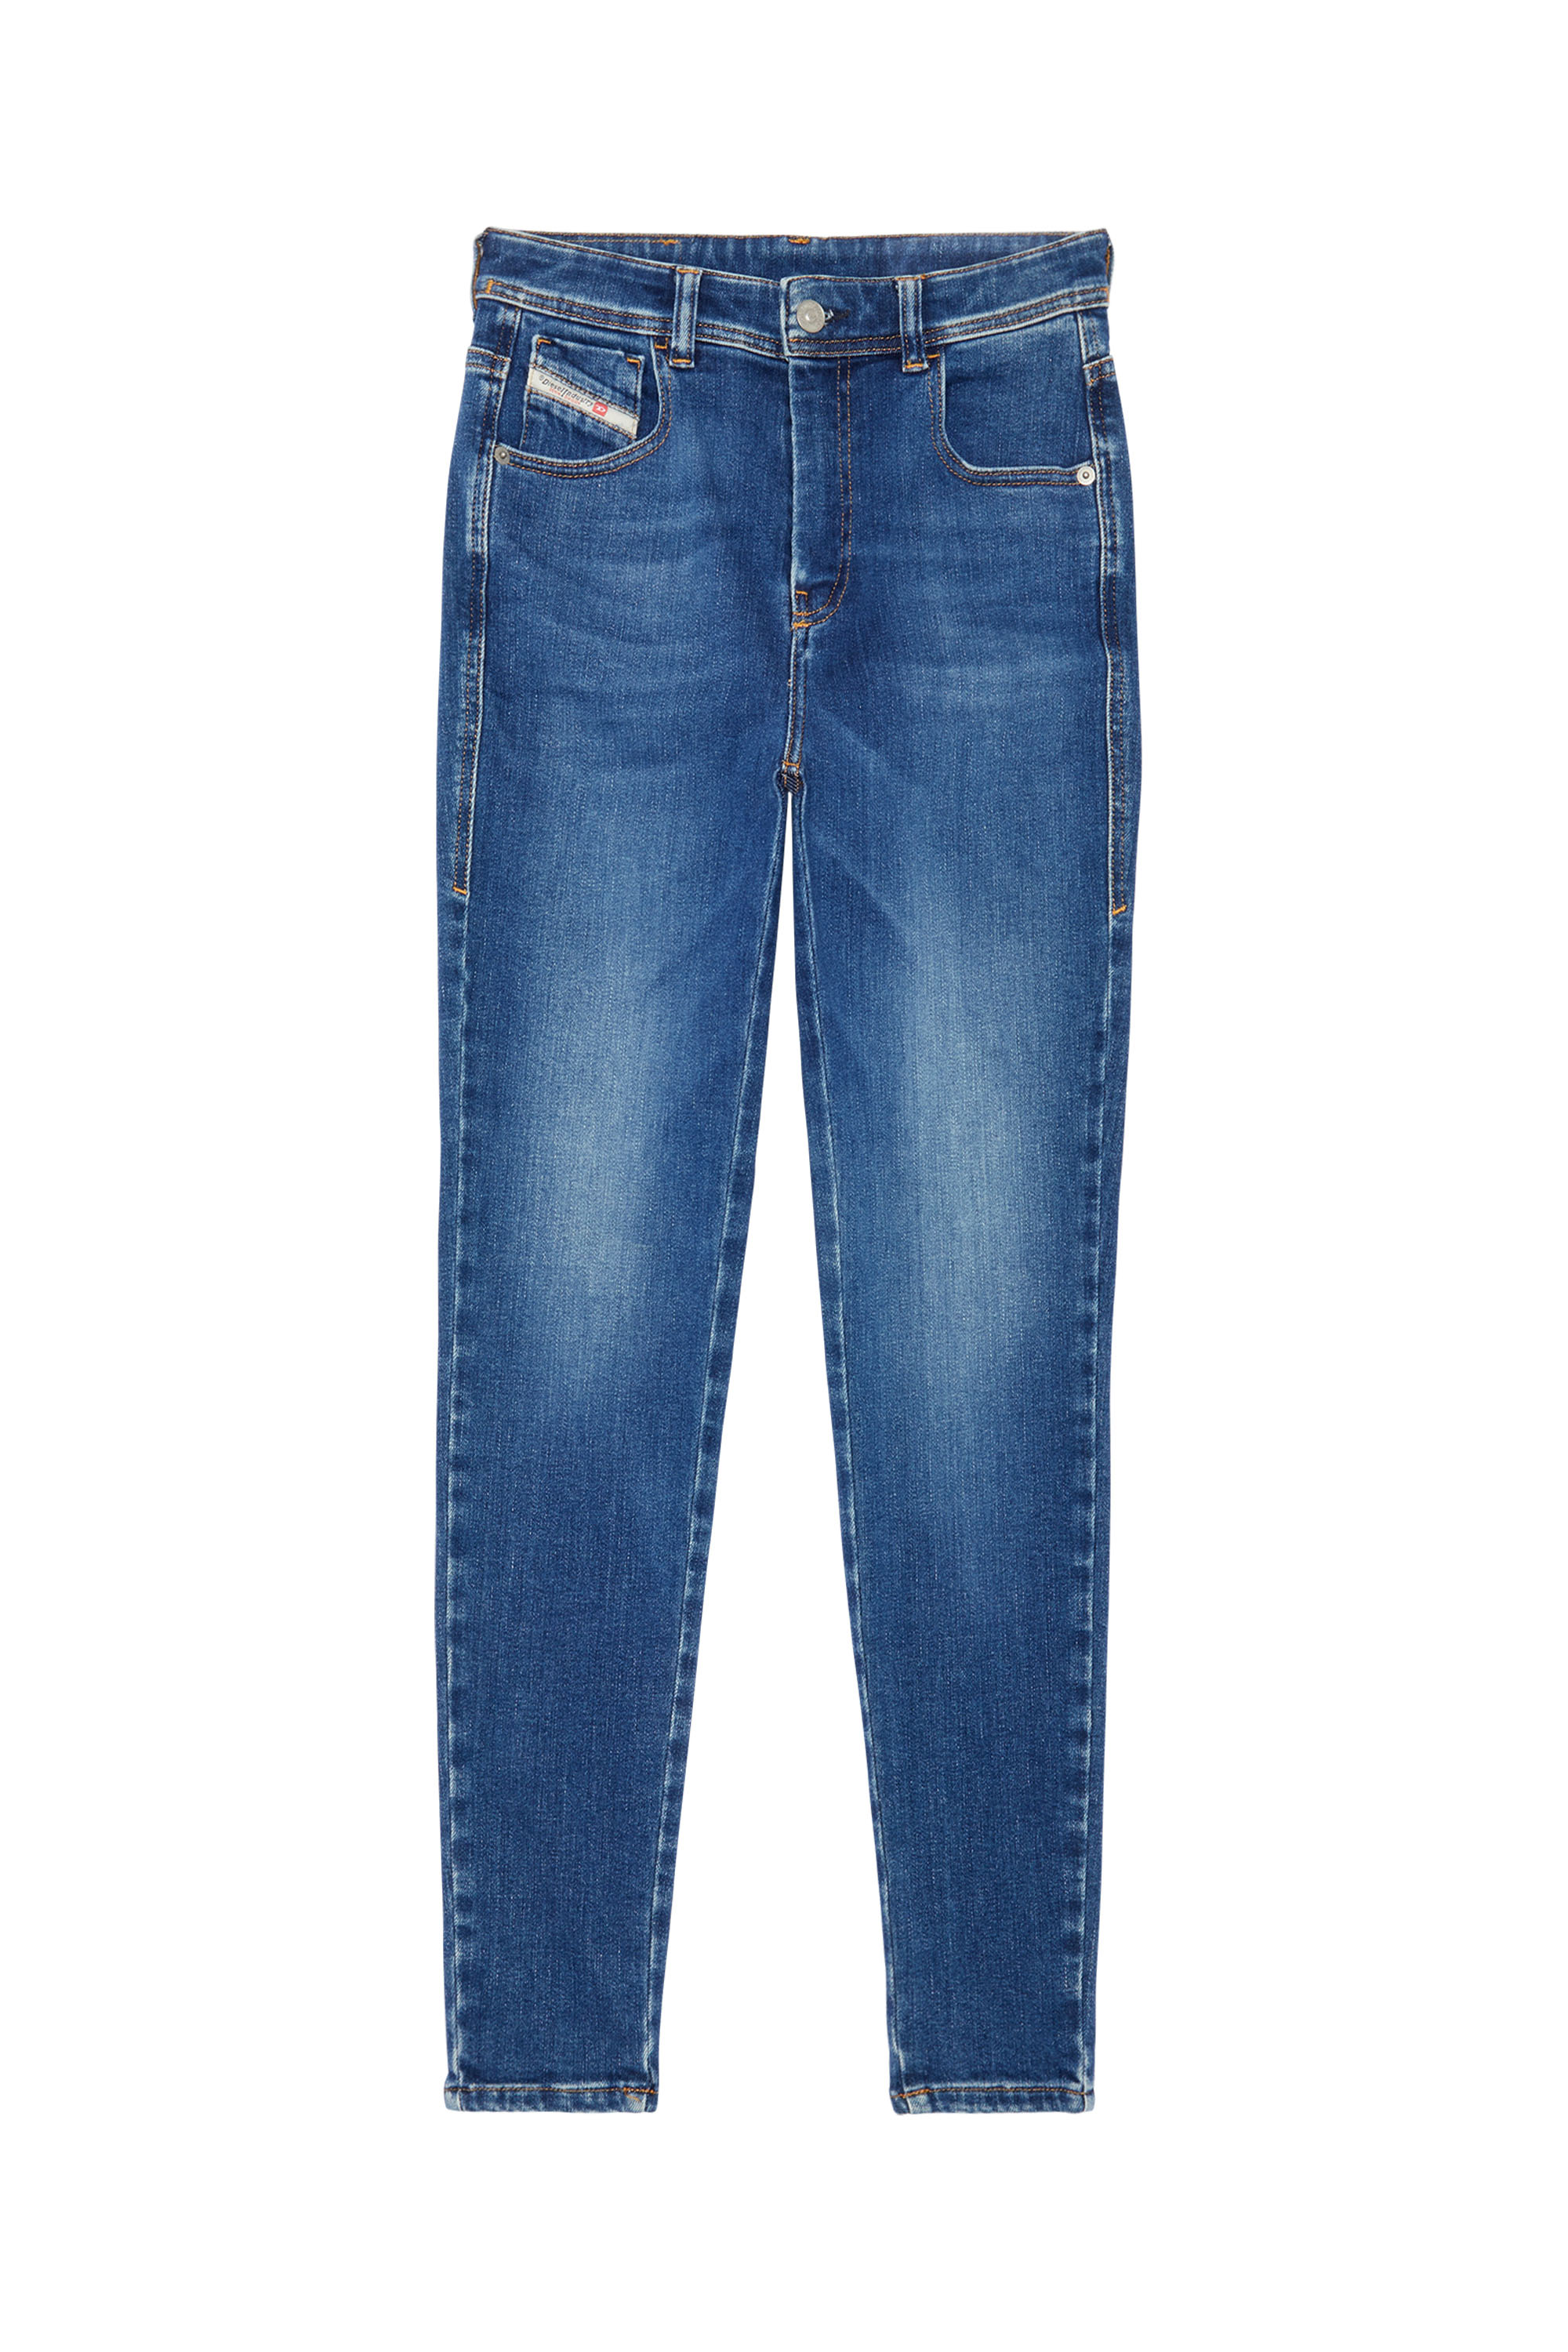 Super skinny Jeans 1984 Slandy-High 09C21, Bleu moyen - Jeans